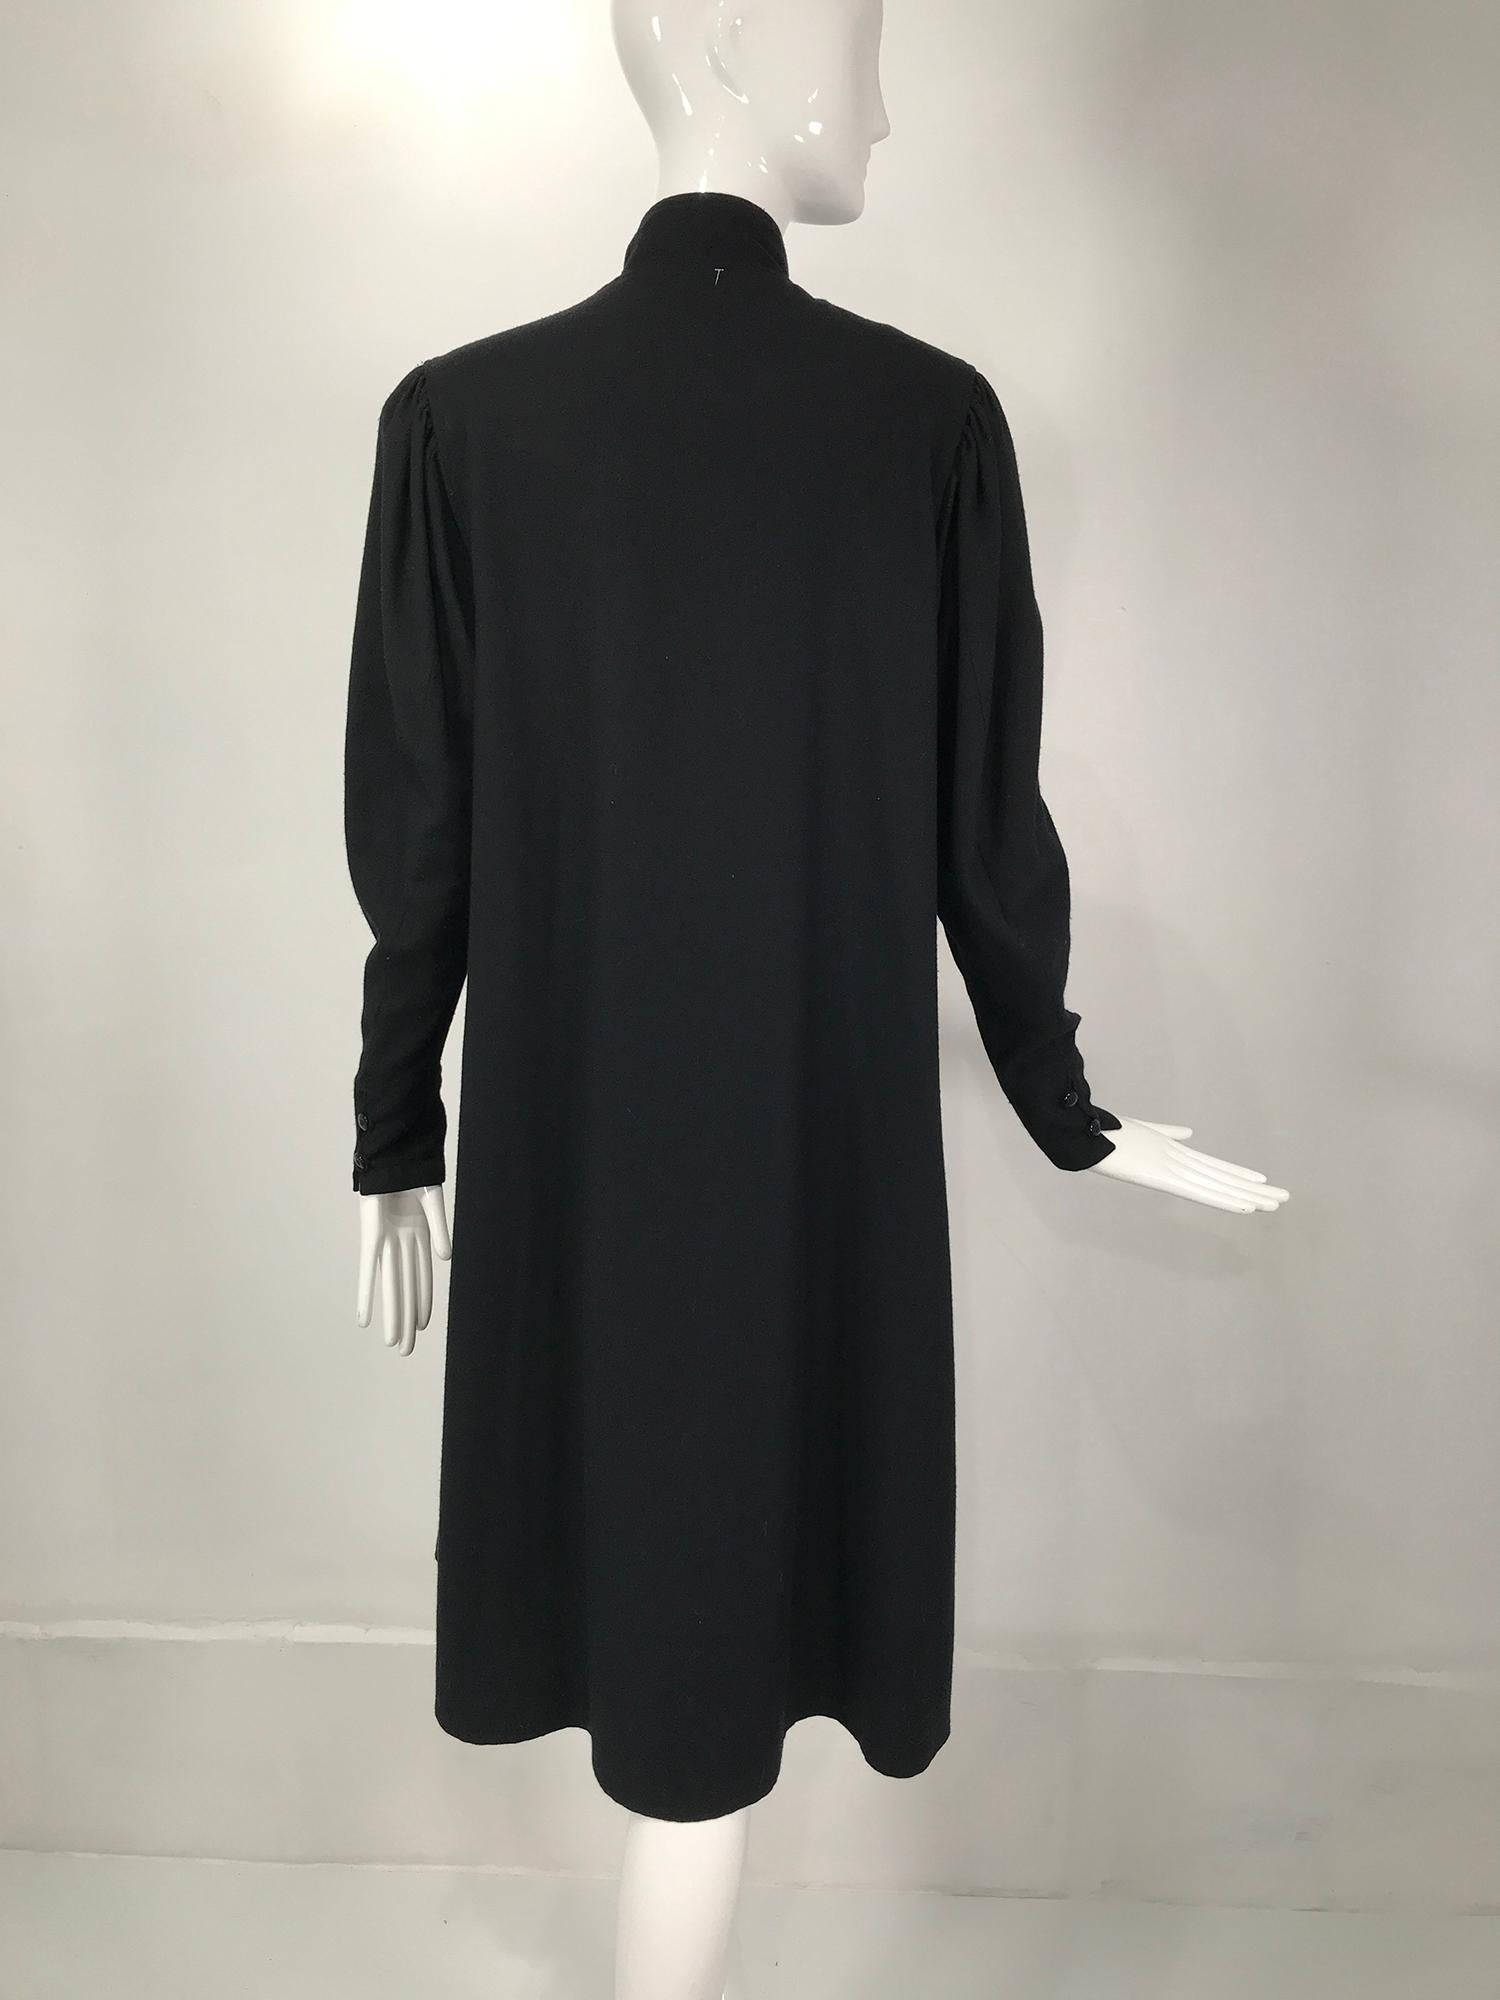 Kenzo Double Face Black Wool Cheongsam Style Coat 1980s For Sale 3